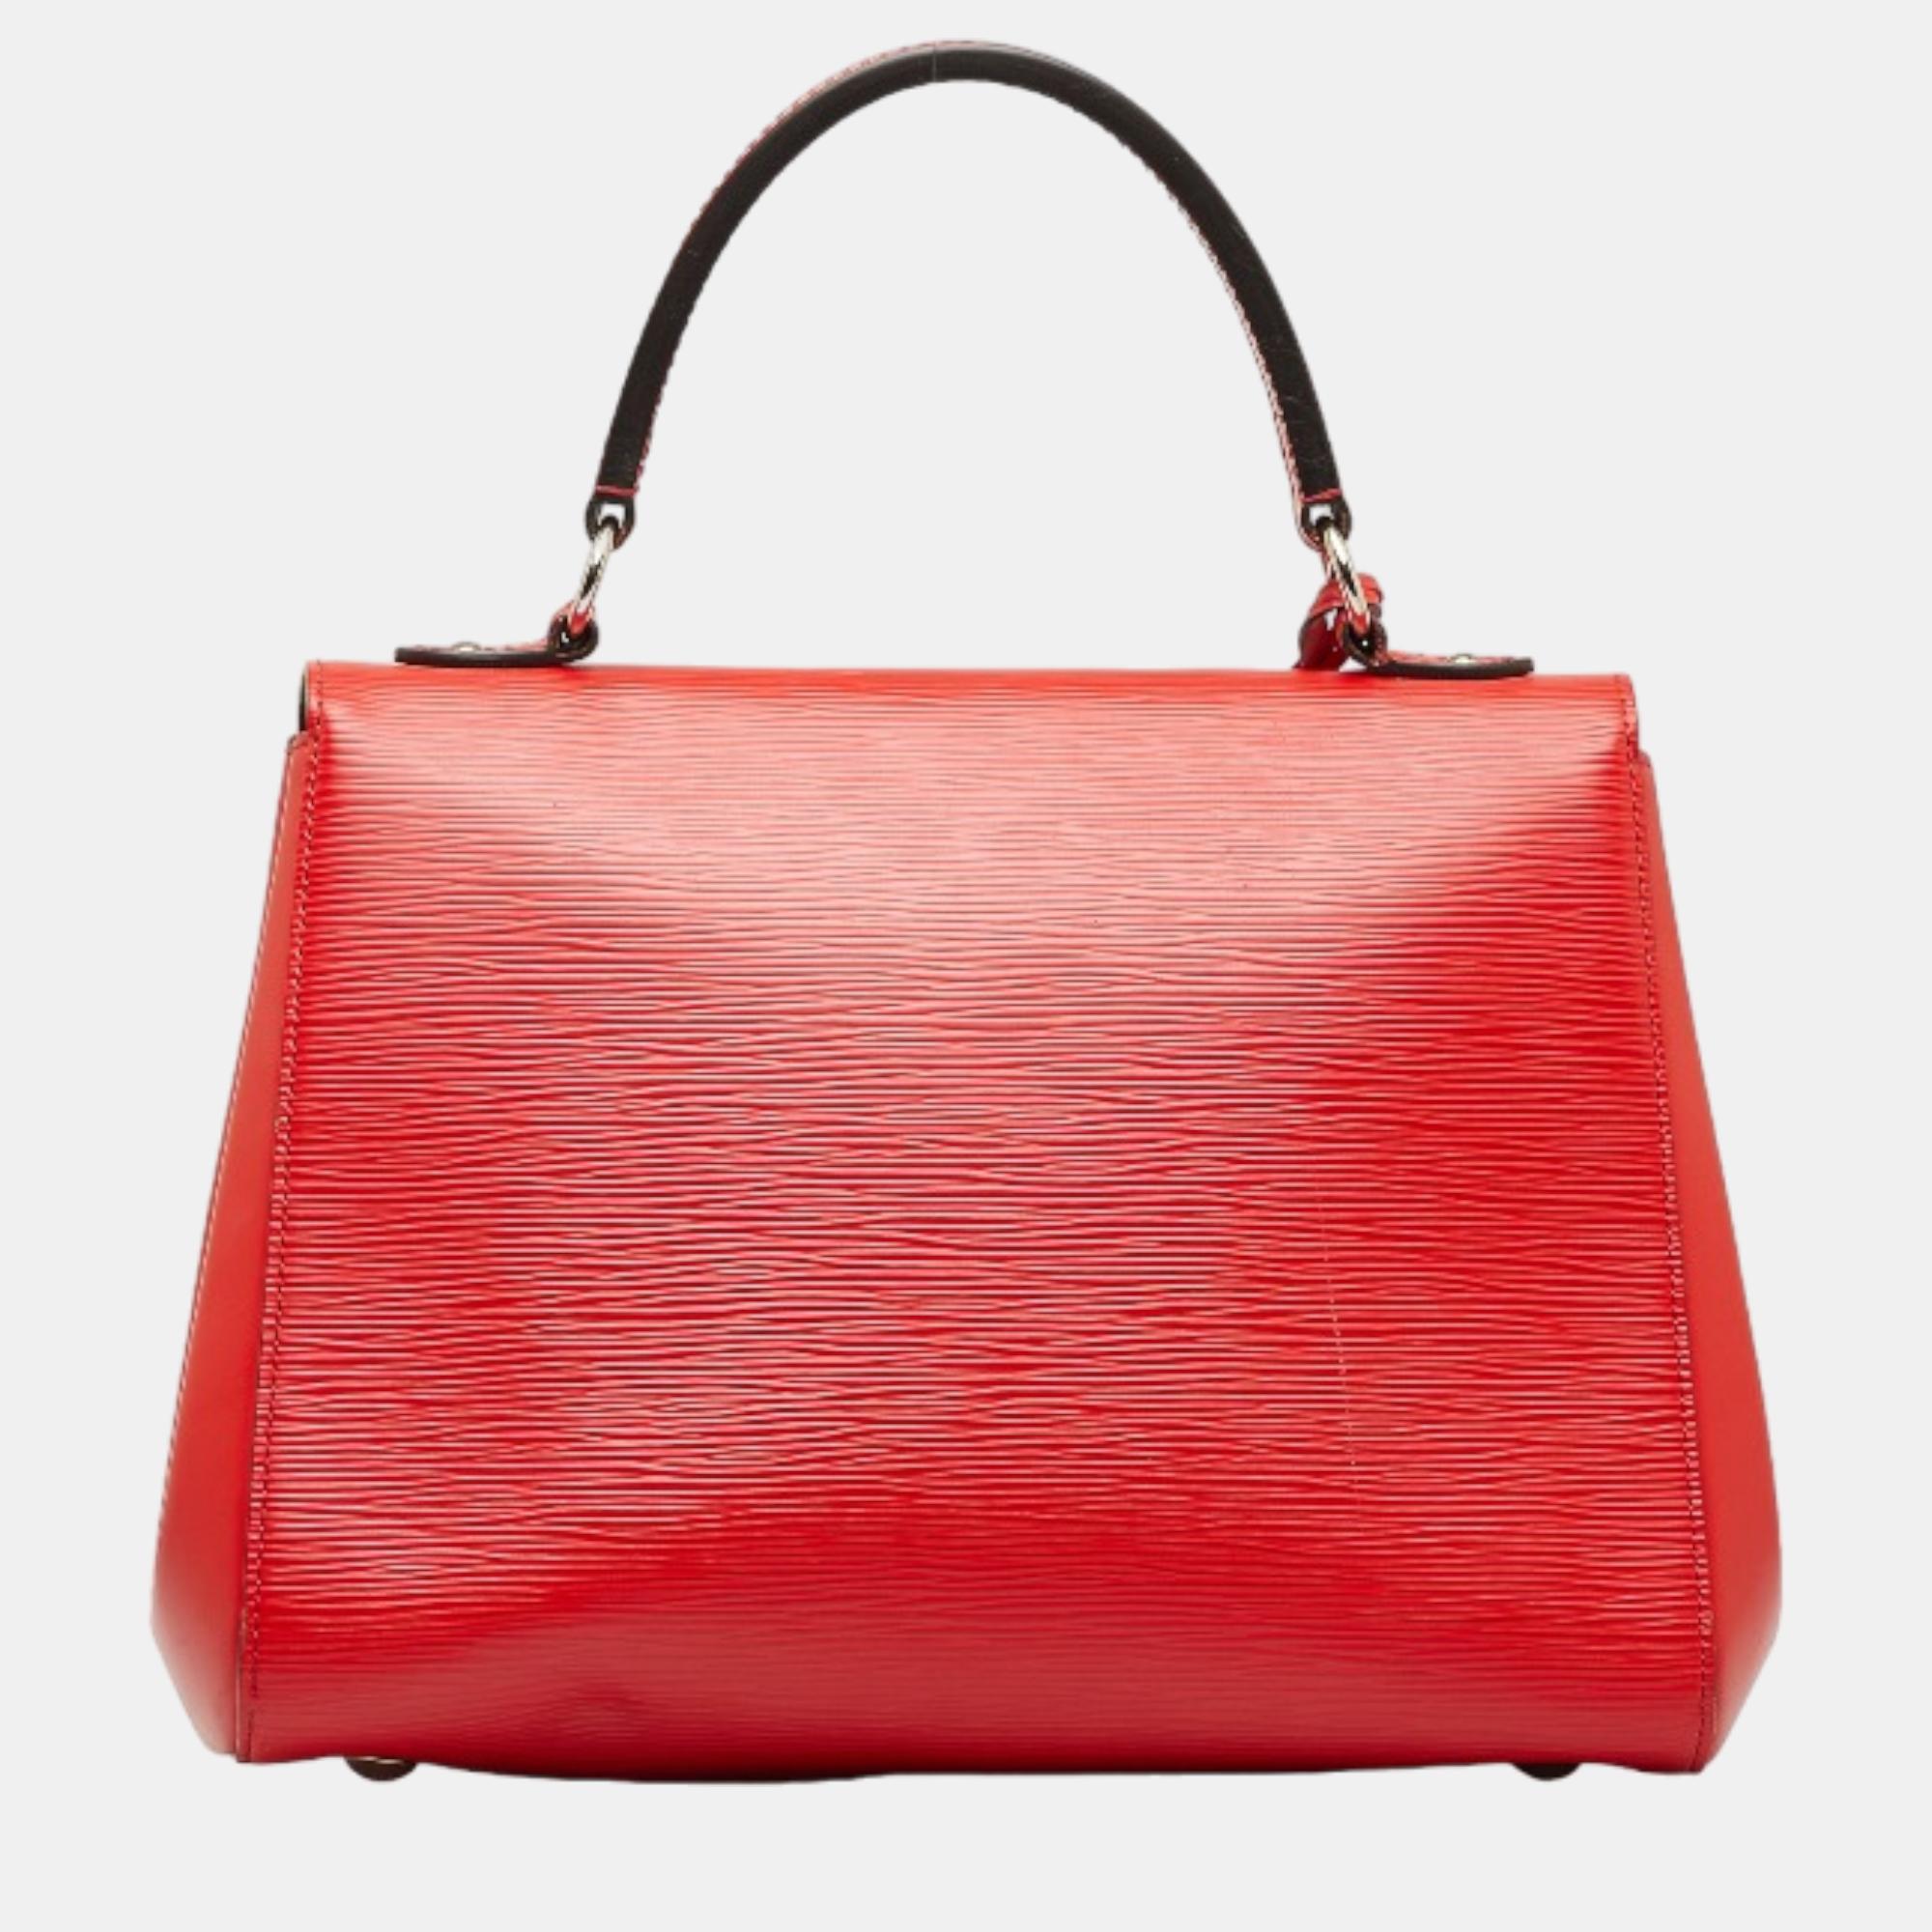 Louis Vuitton Red Leather Epi Cluny MM Handbag